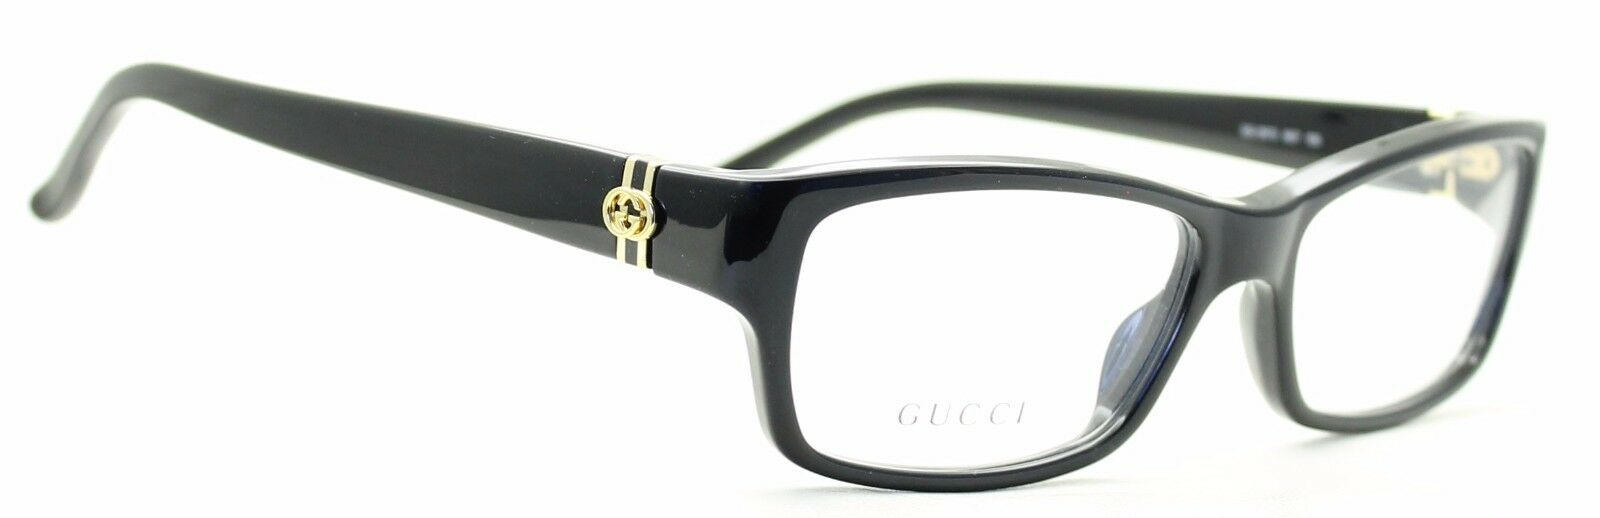 GUCCI GG3573 807 52mm Eyewear FRAMES RX Optical Glasses Eyeglasses New - Italy